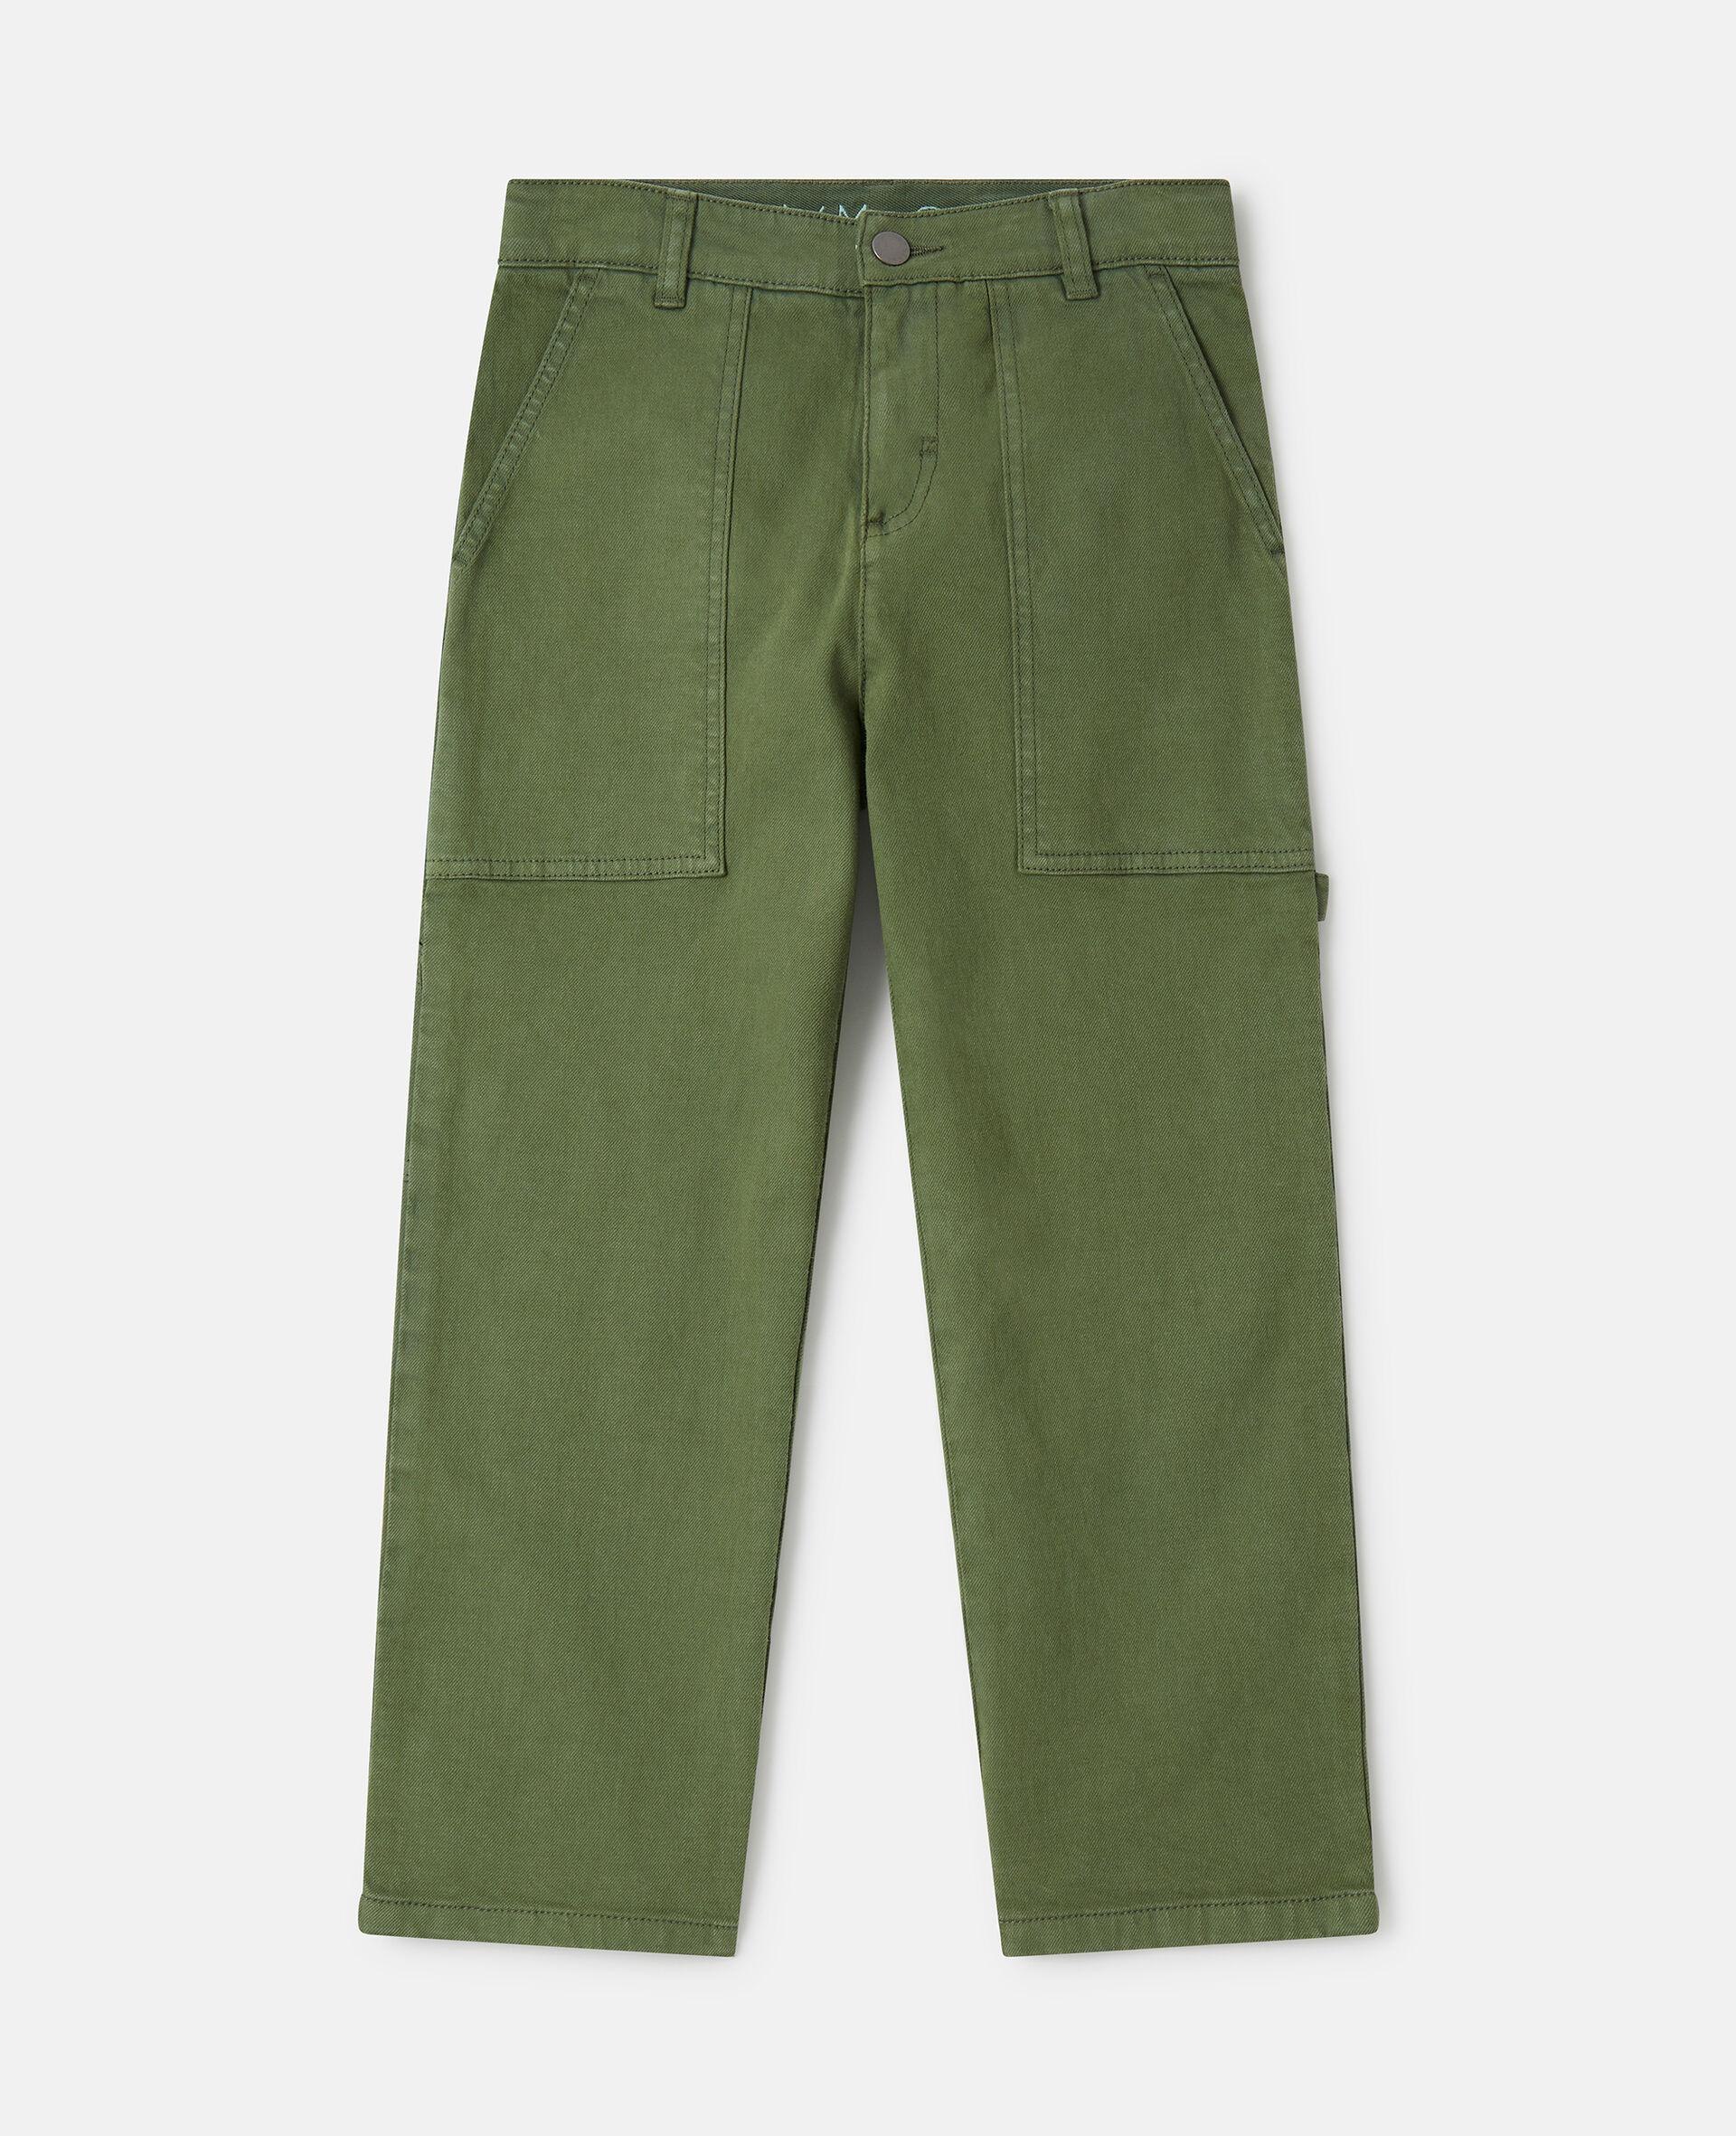 Pantalon avec poches plaquées-Vert-medium